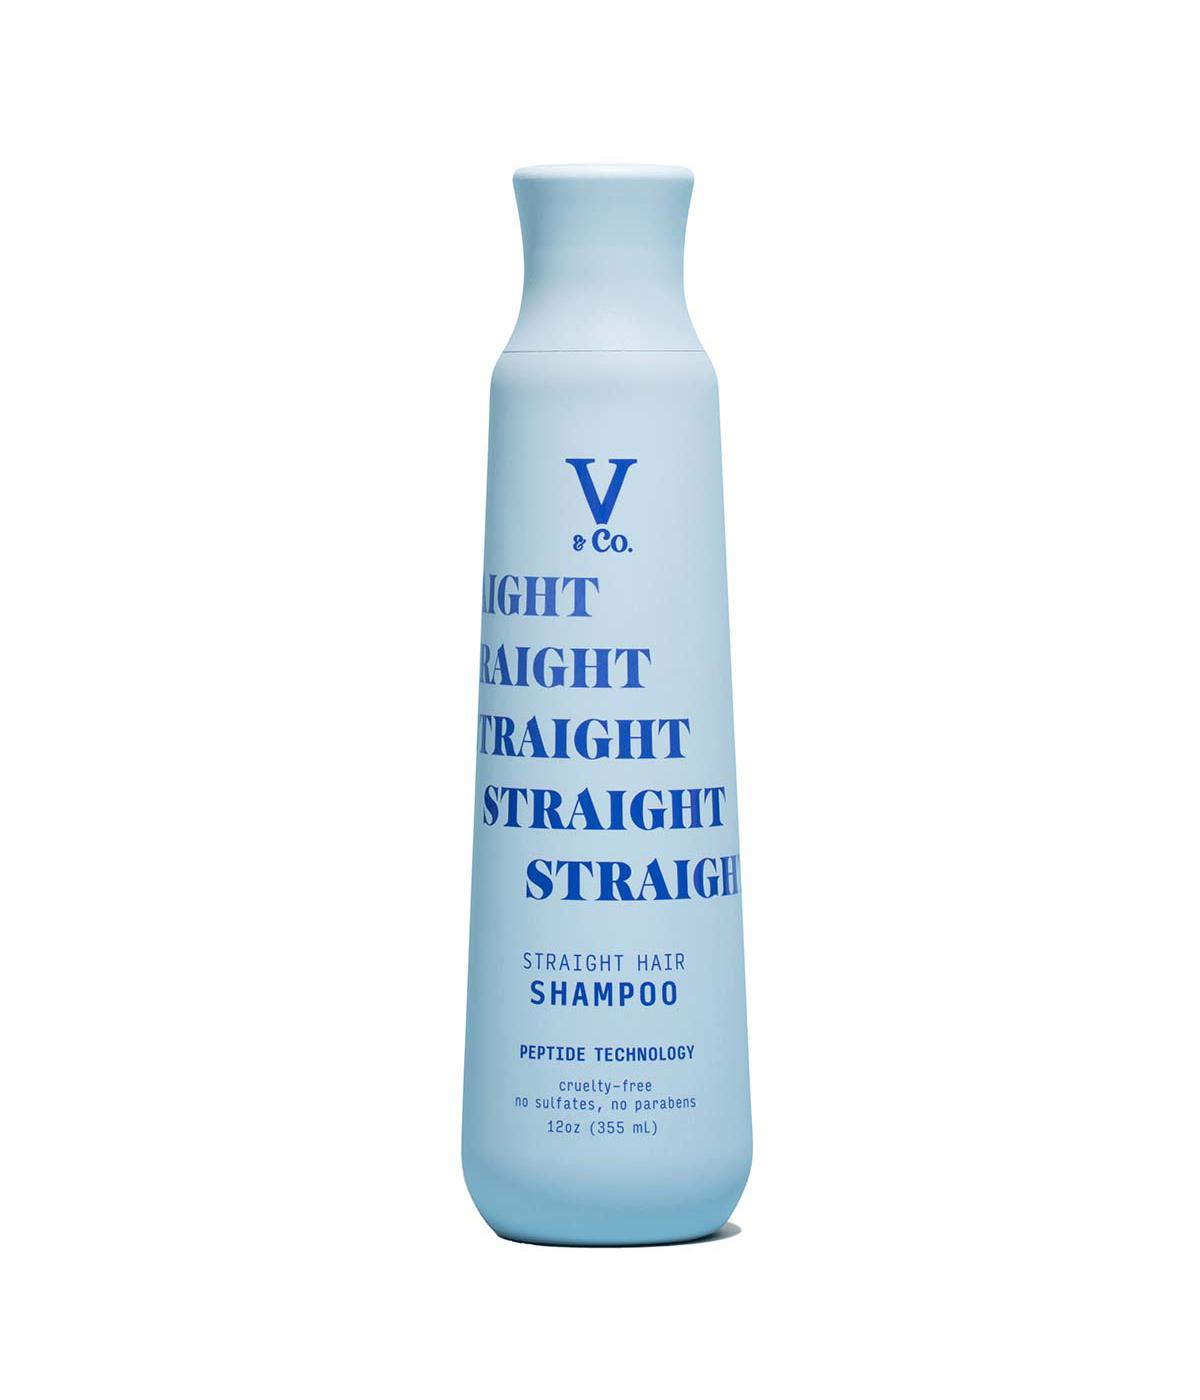 V&Co. Straight Hair Shampoo; image 1 of 2